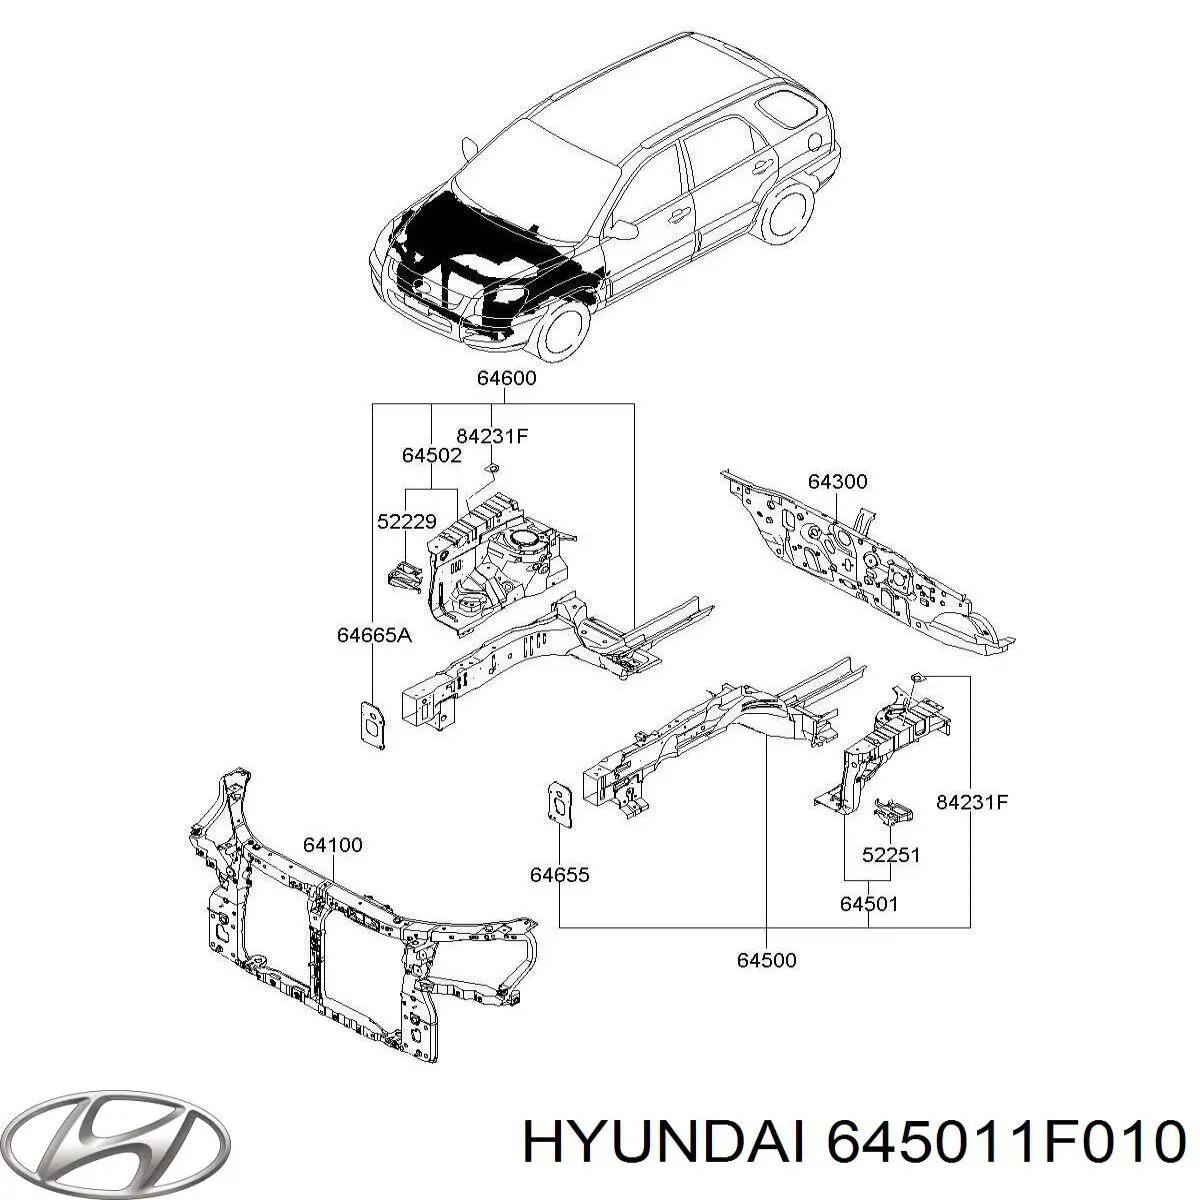 645011F010 Hyundai/Kia arco de rueda, panel lateral, izquierdo